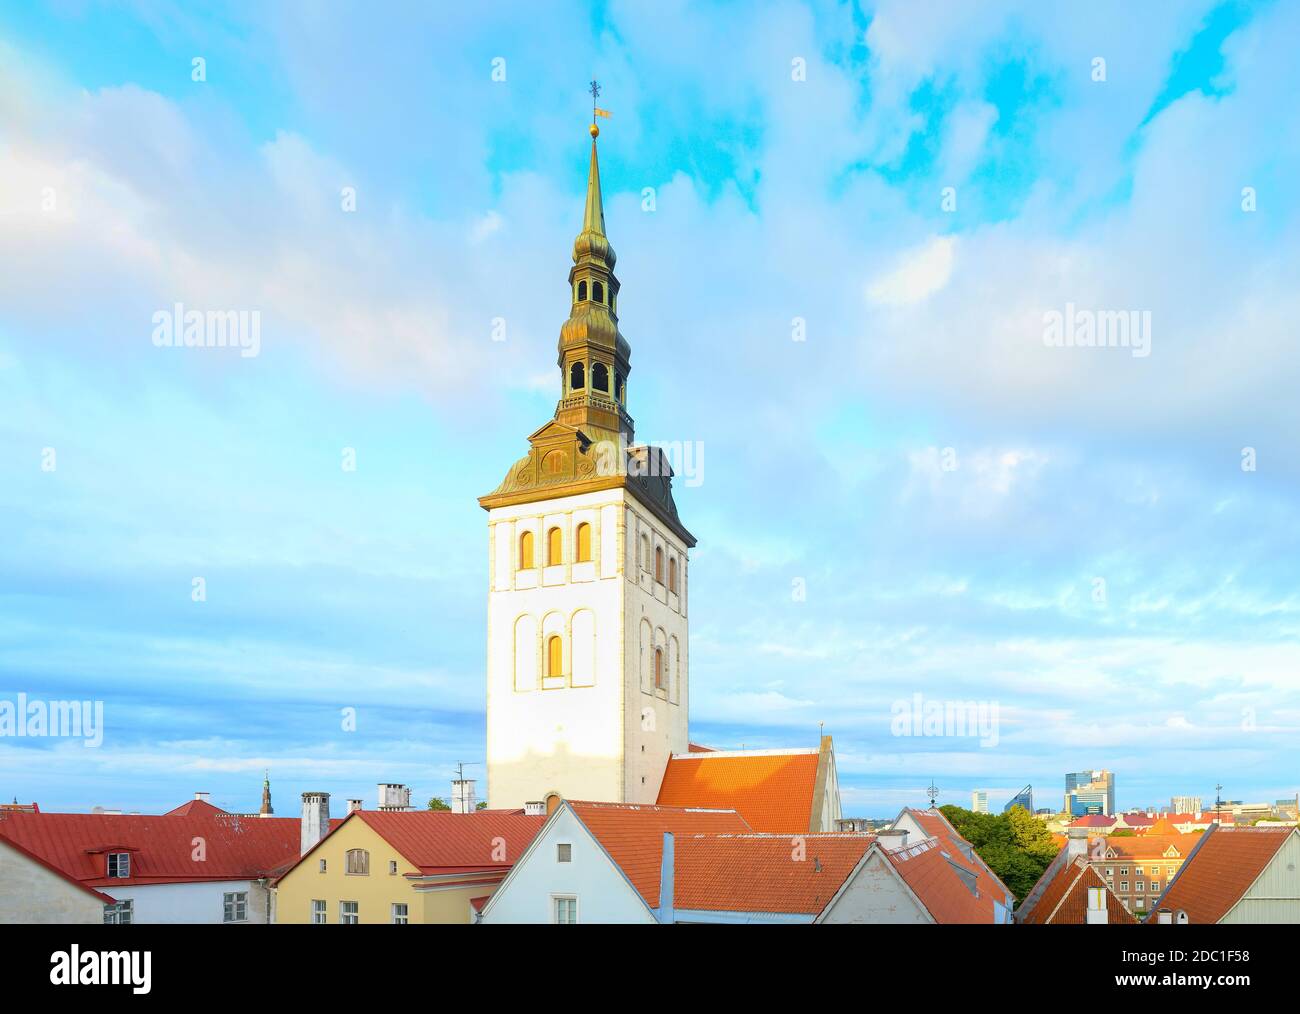 Saint Nicholas church at sunset. Tallinn, Estonia Stock Photo - Alamy